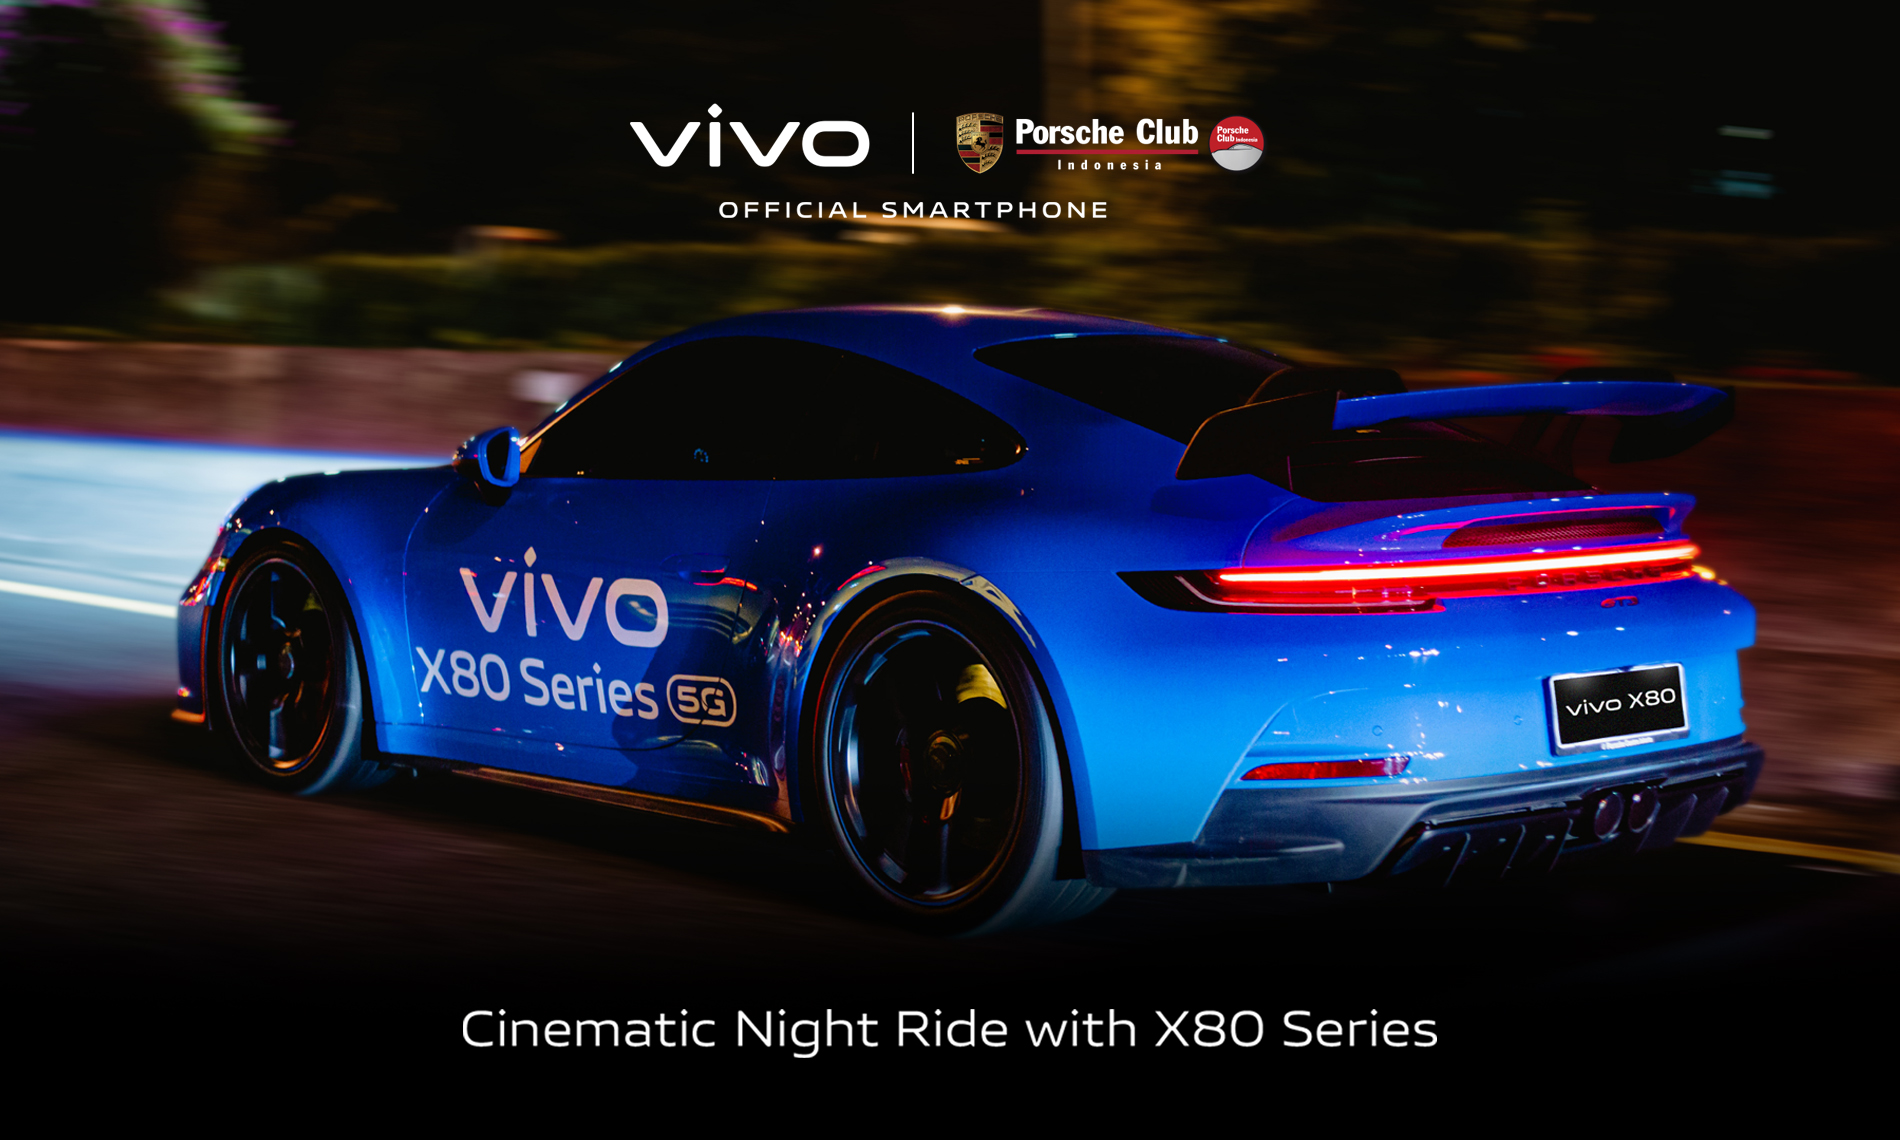 Cinematic Night Ride with vivo X80 Series, vivo and Porsche Club Indonesia Collaboration